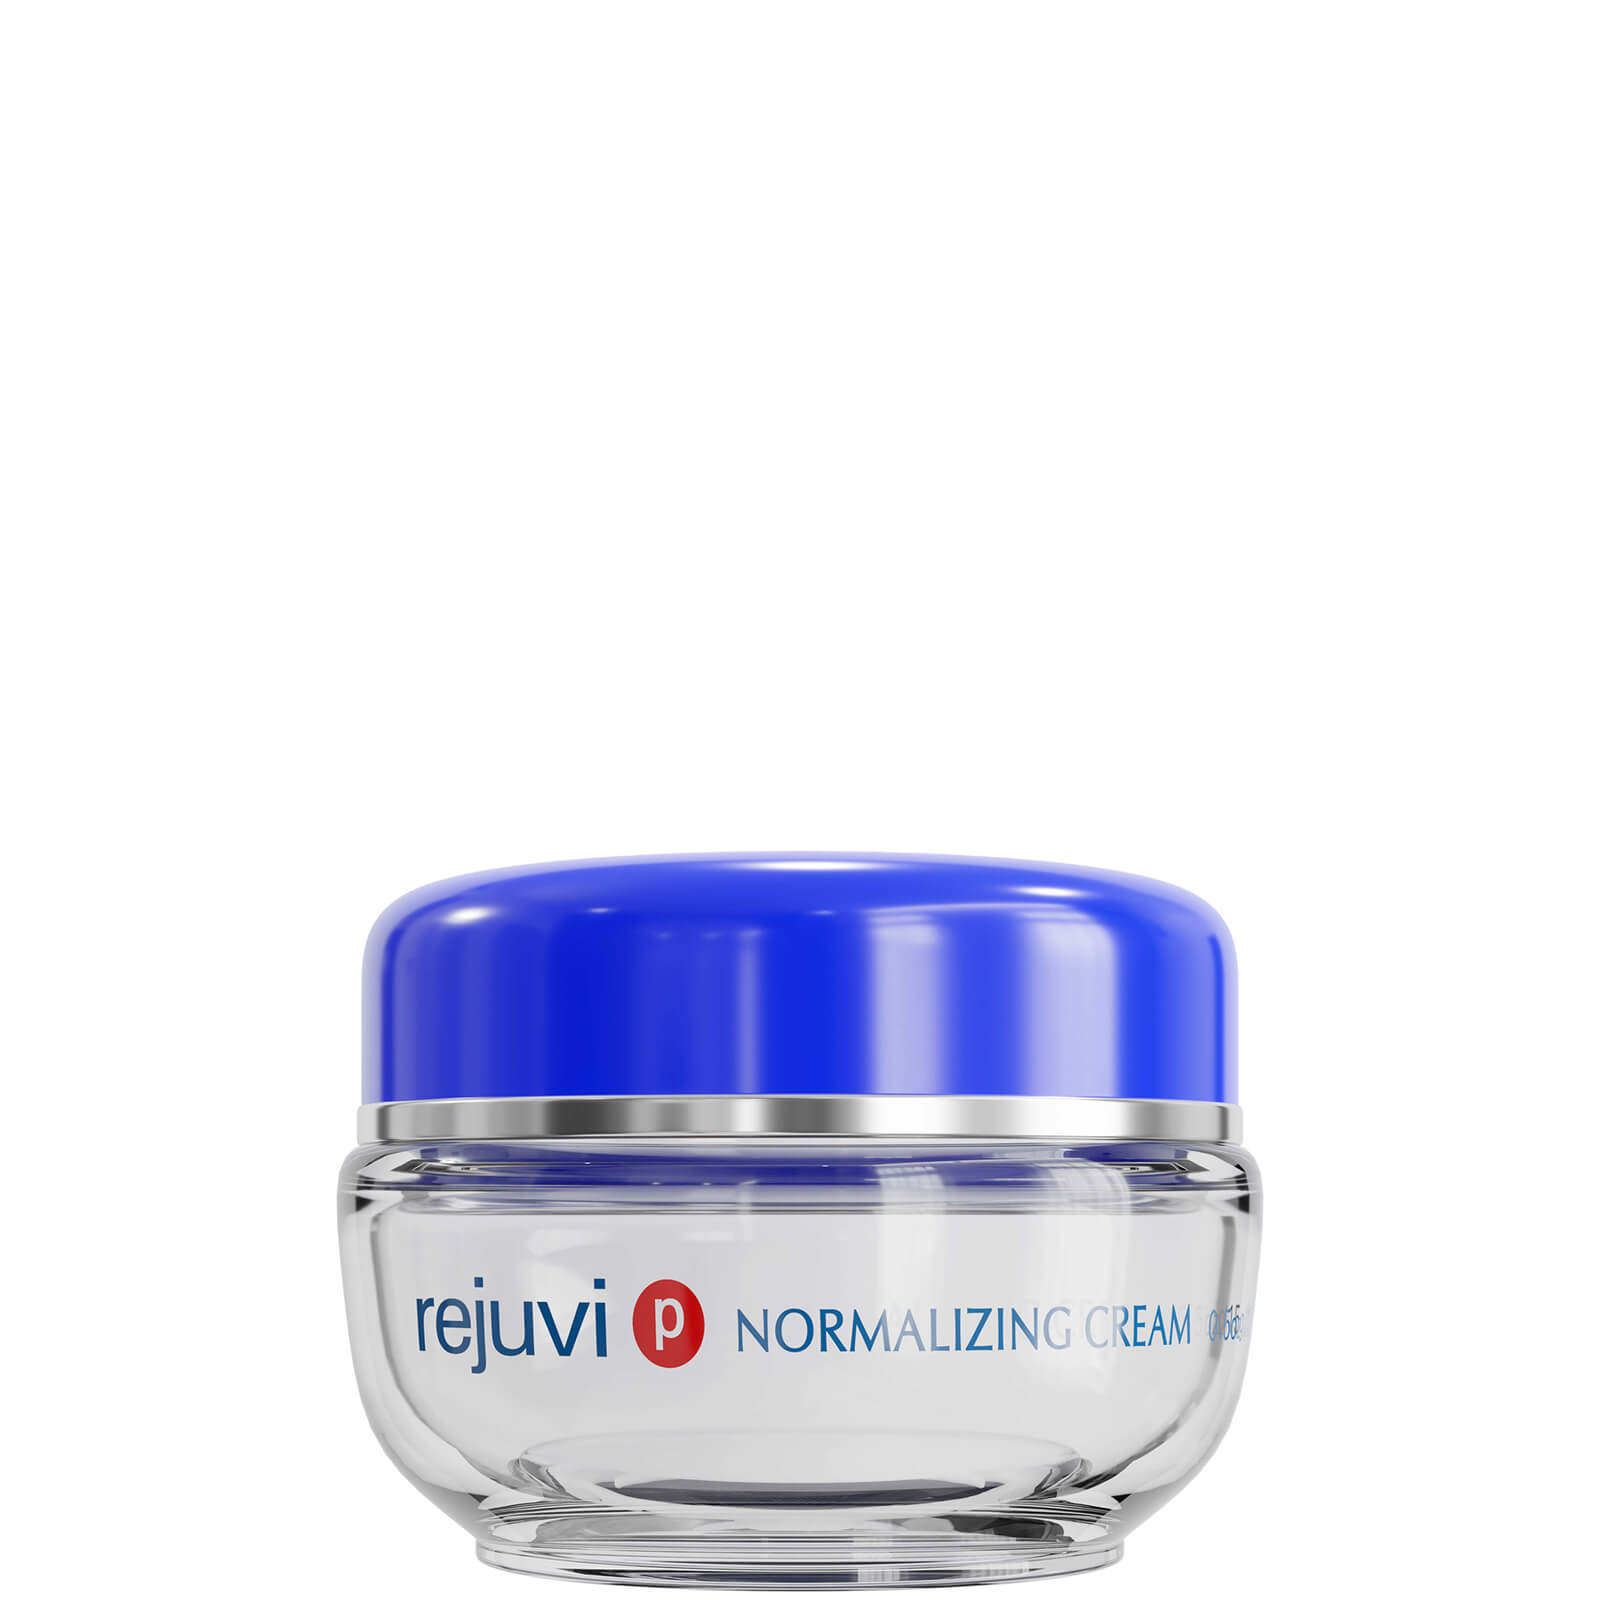 Rejuvi 'p' Normalizing Cream 2.86 oz In Blue